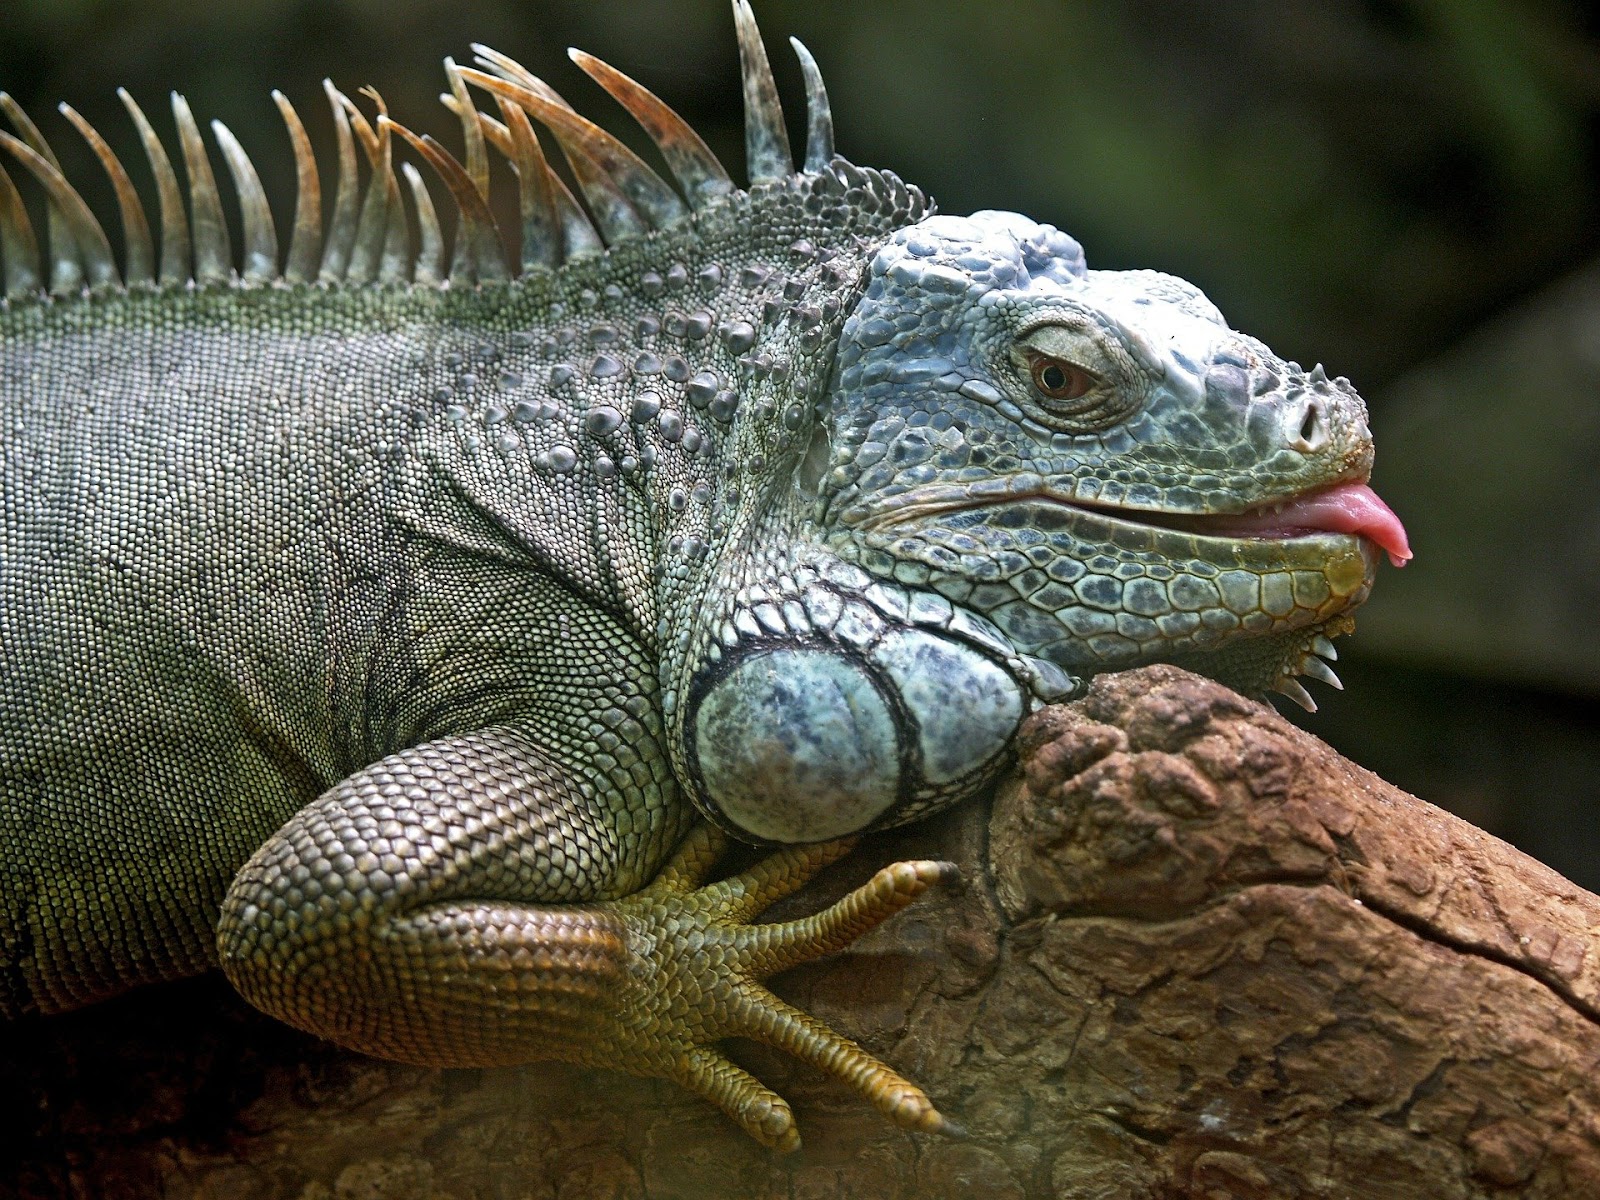 Iguana sticking out its tongue